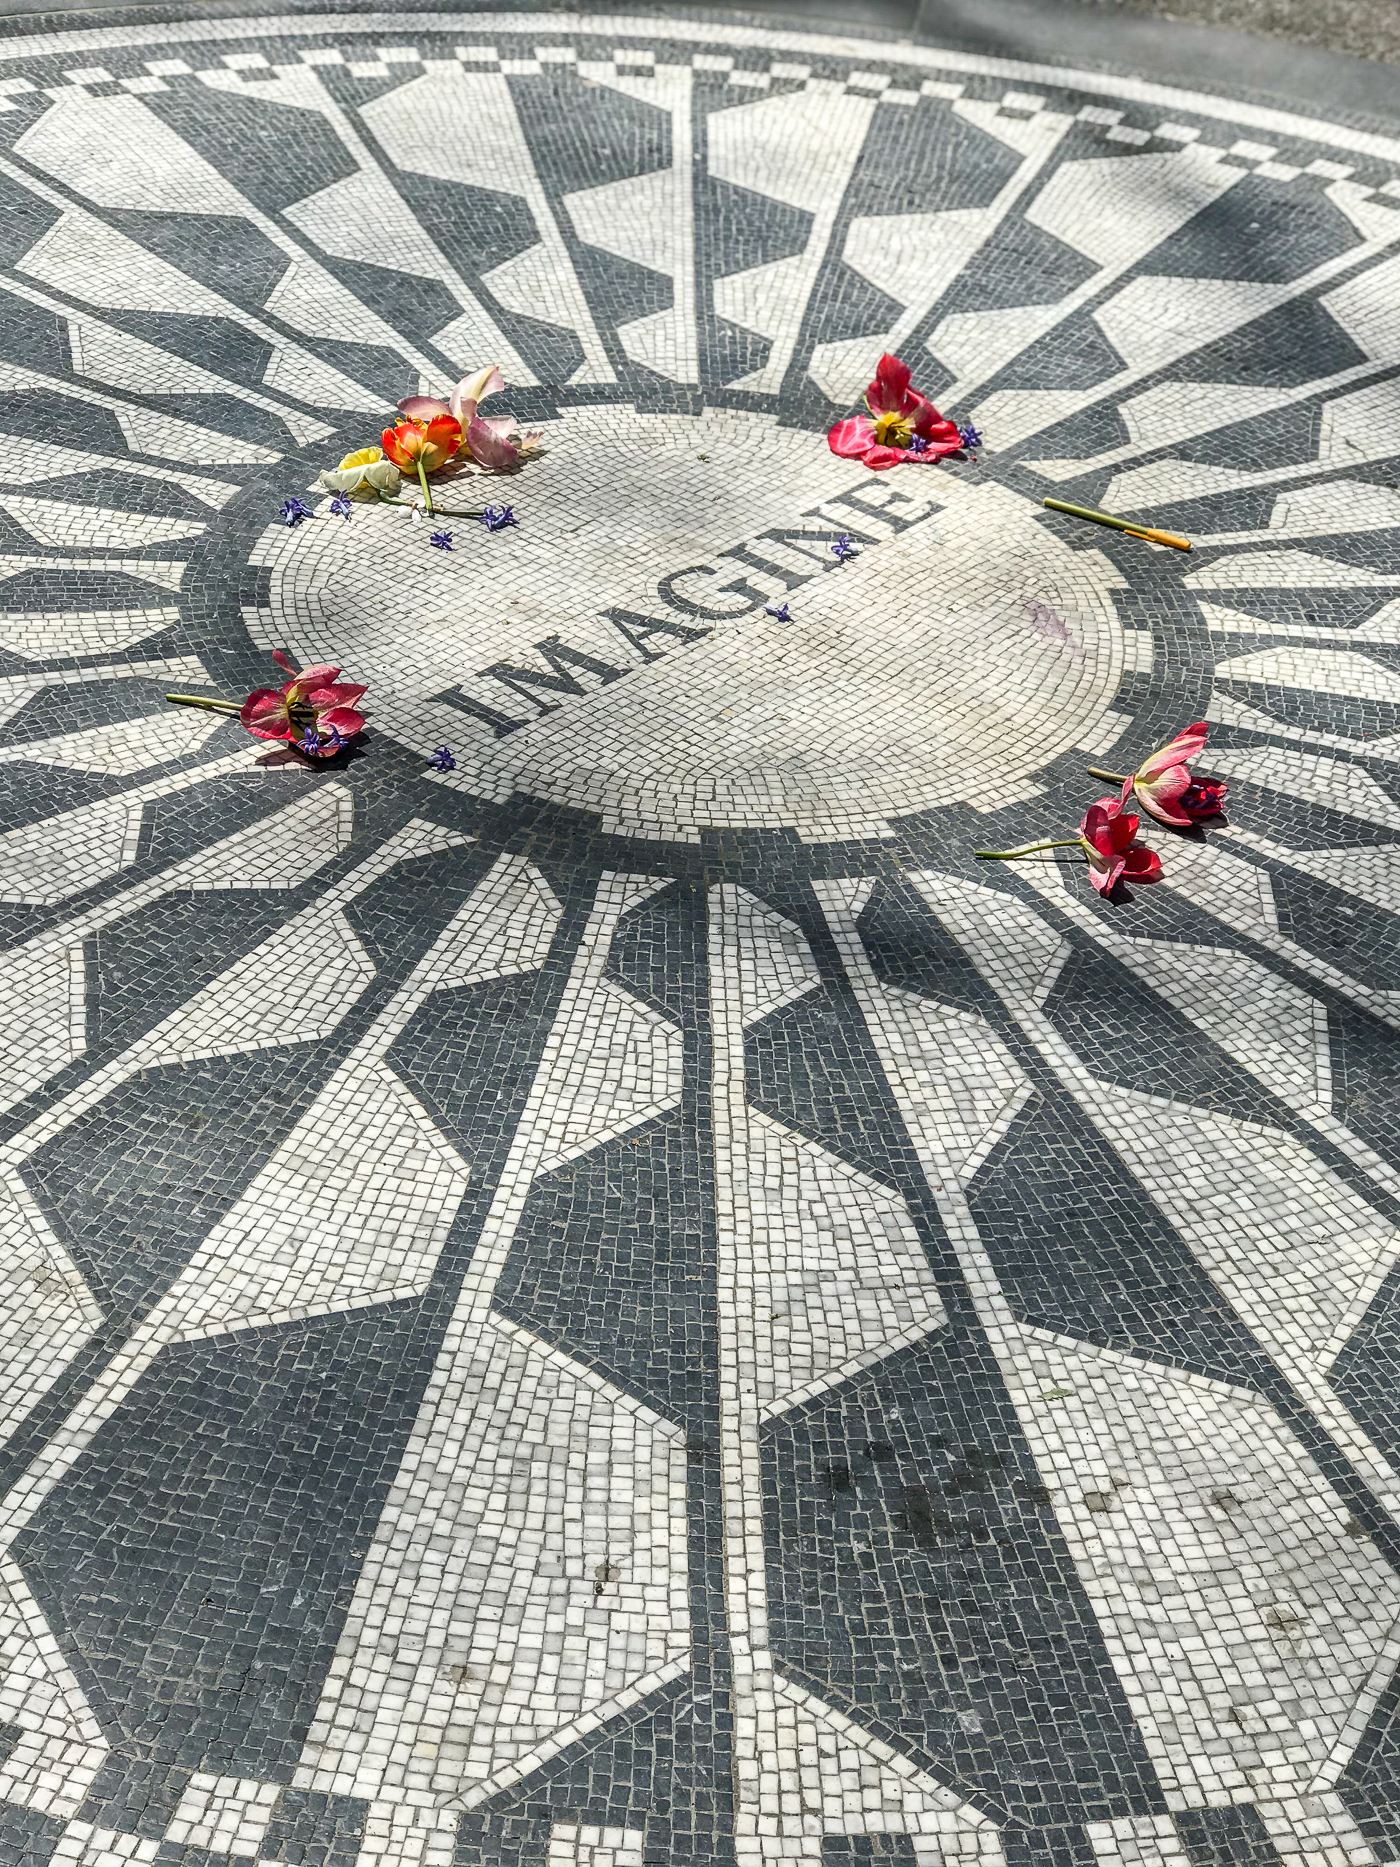 Imagine Memorial of John Lennon in NYC Central Park